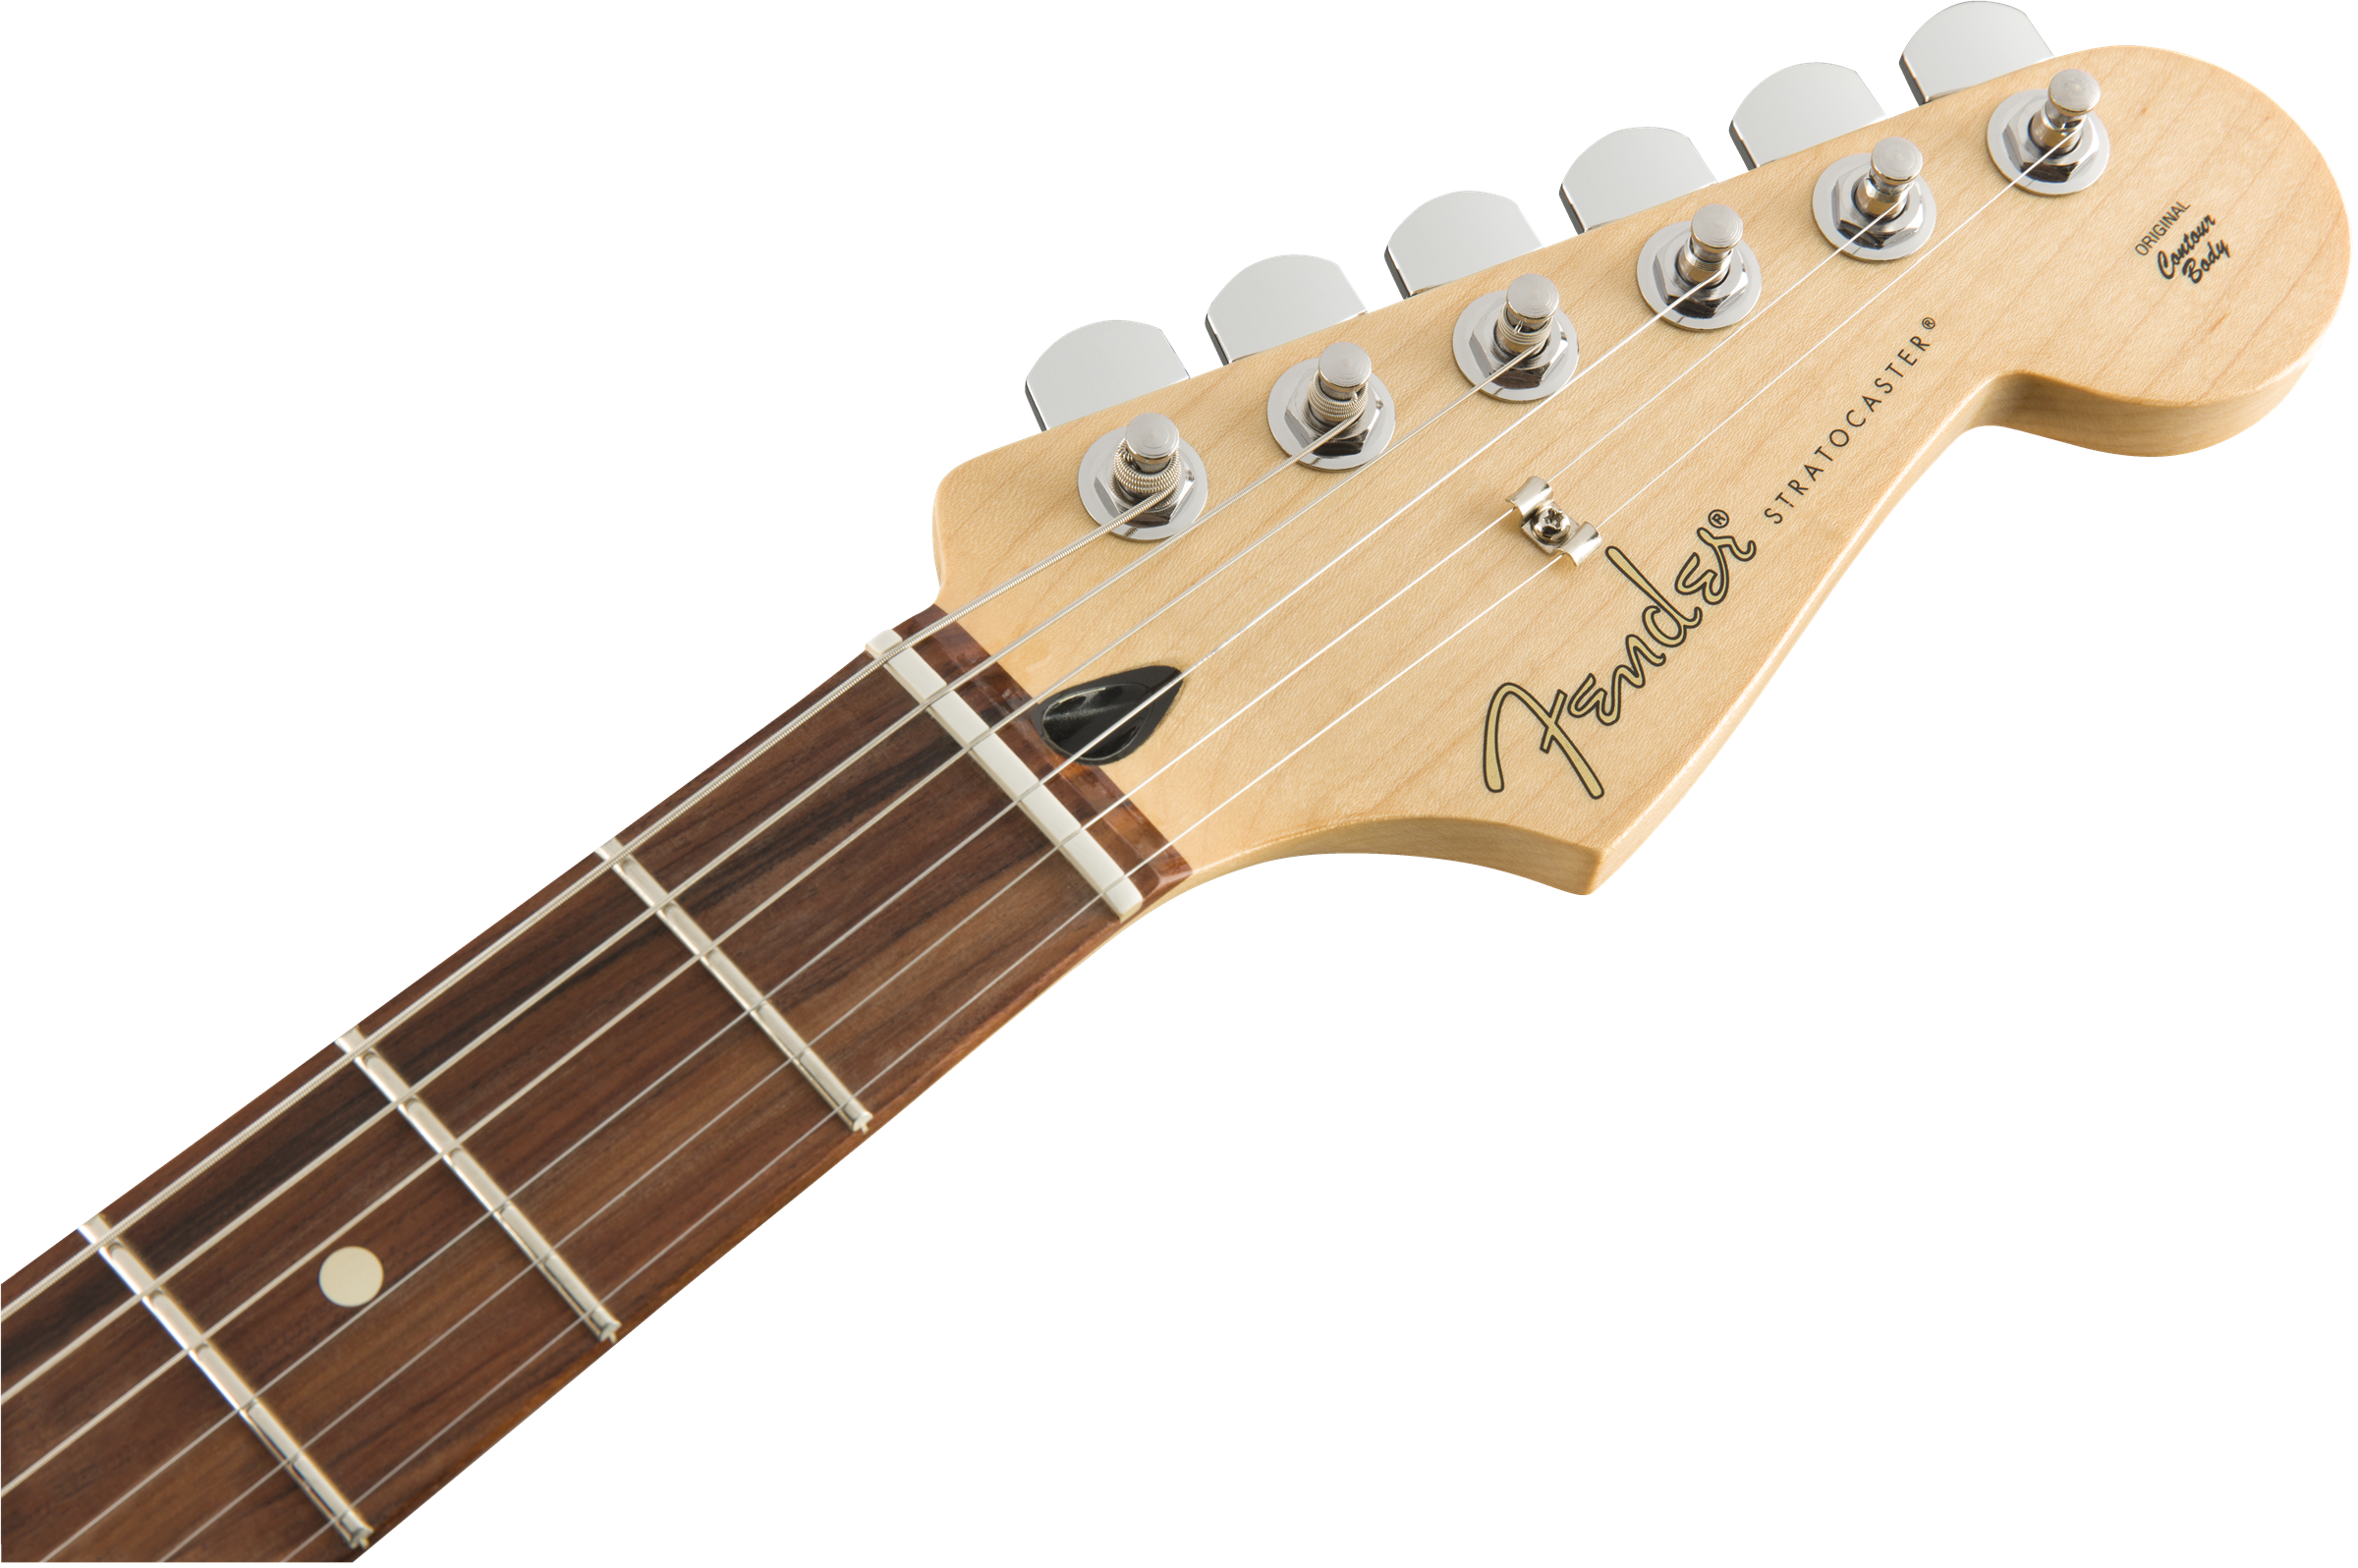 Fender Player Stratocaster Plus Top in Tobacco Sunburst